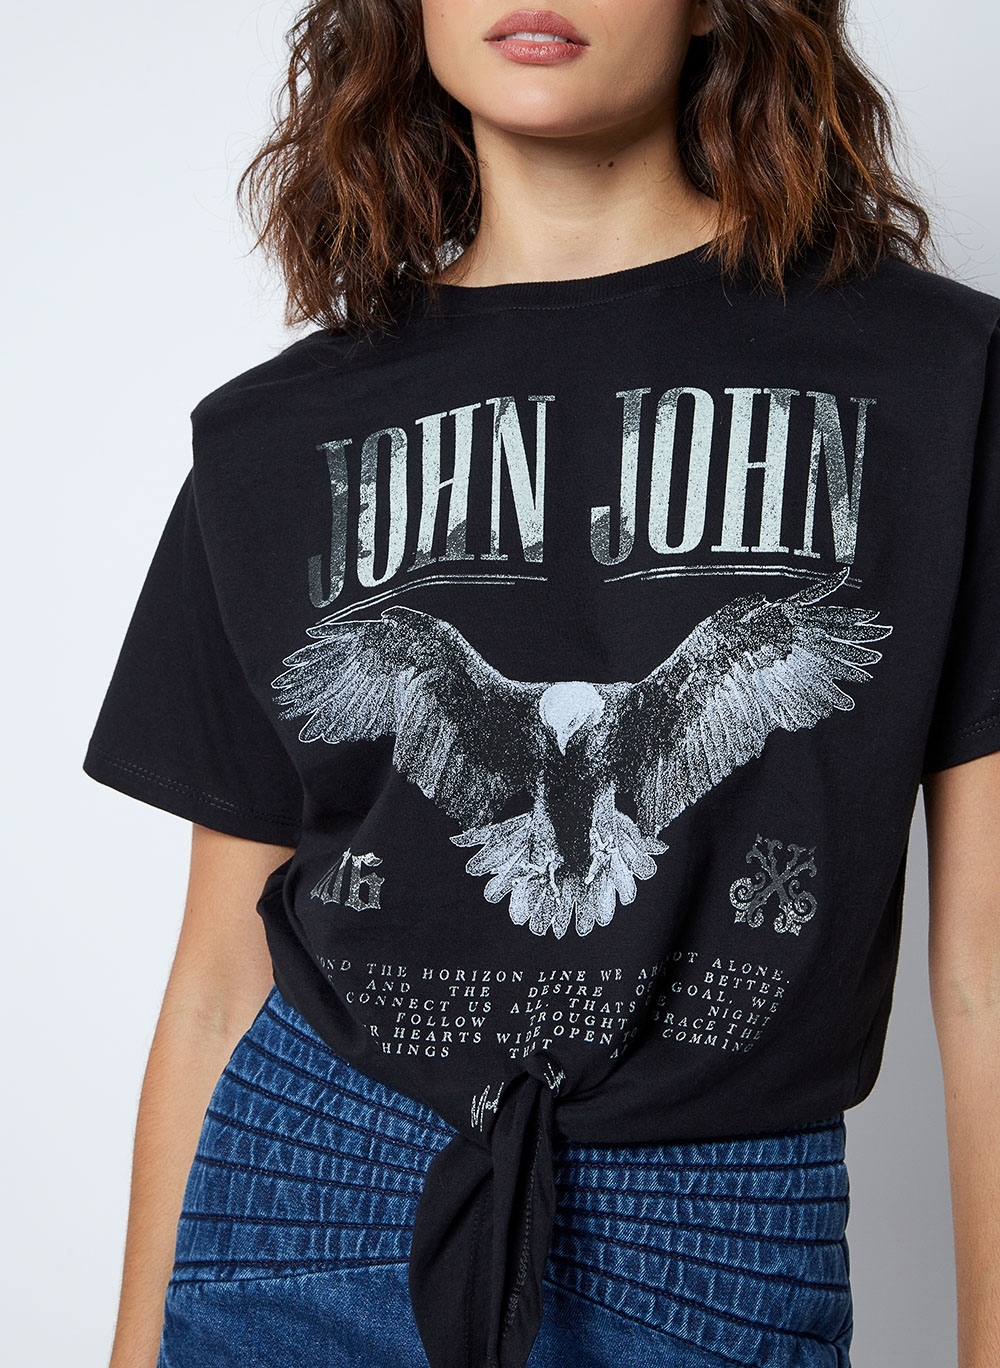 Camiseta John John Female Feminina - Dom Store Multimarcas